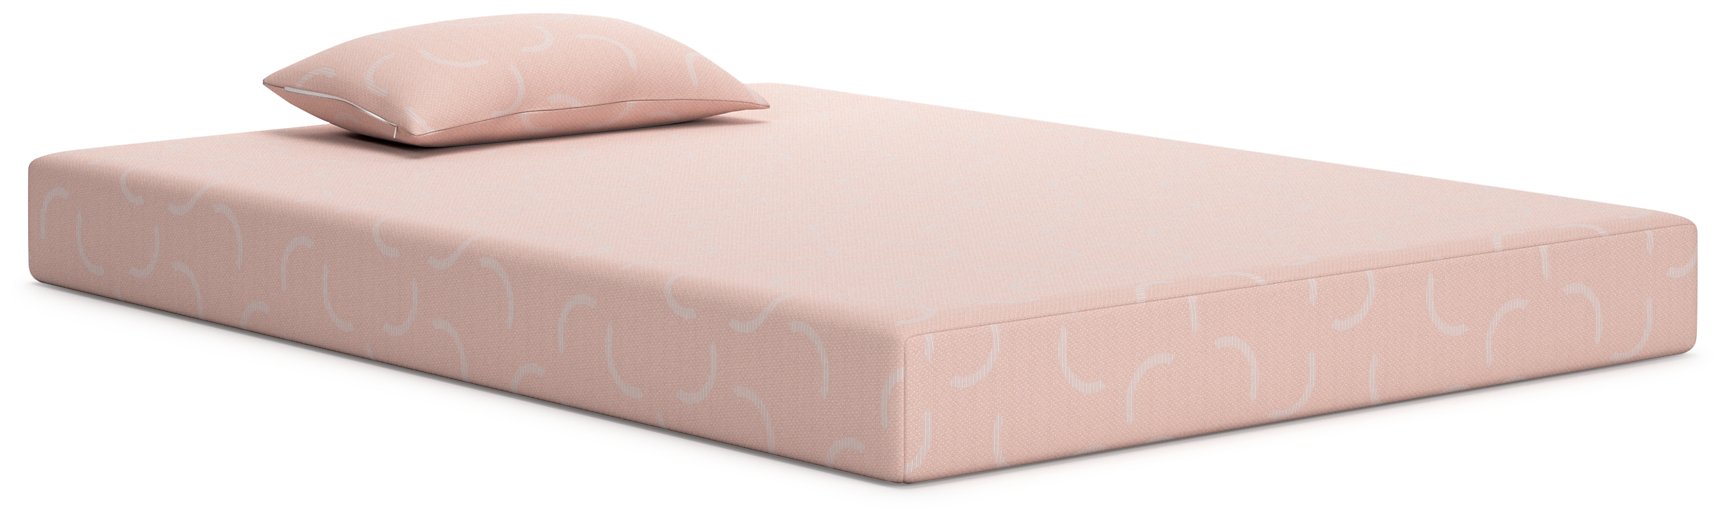 iKidz Coral Mattress and Pillow - All Brands Furniture (NJ)